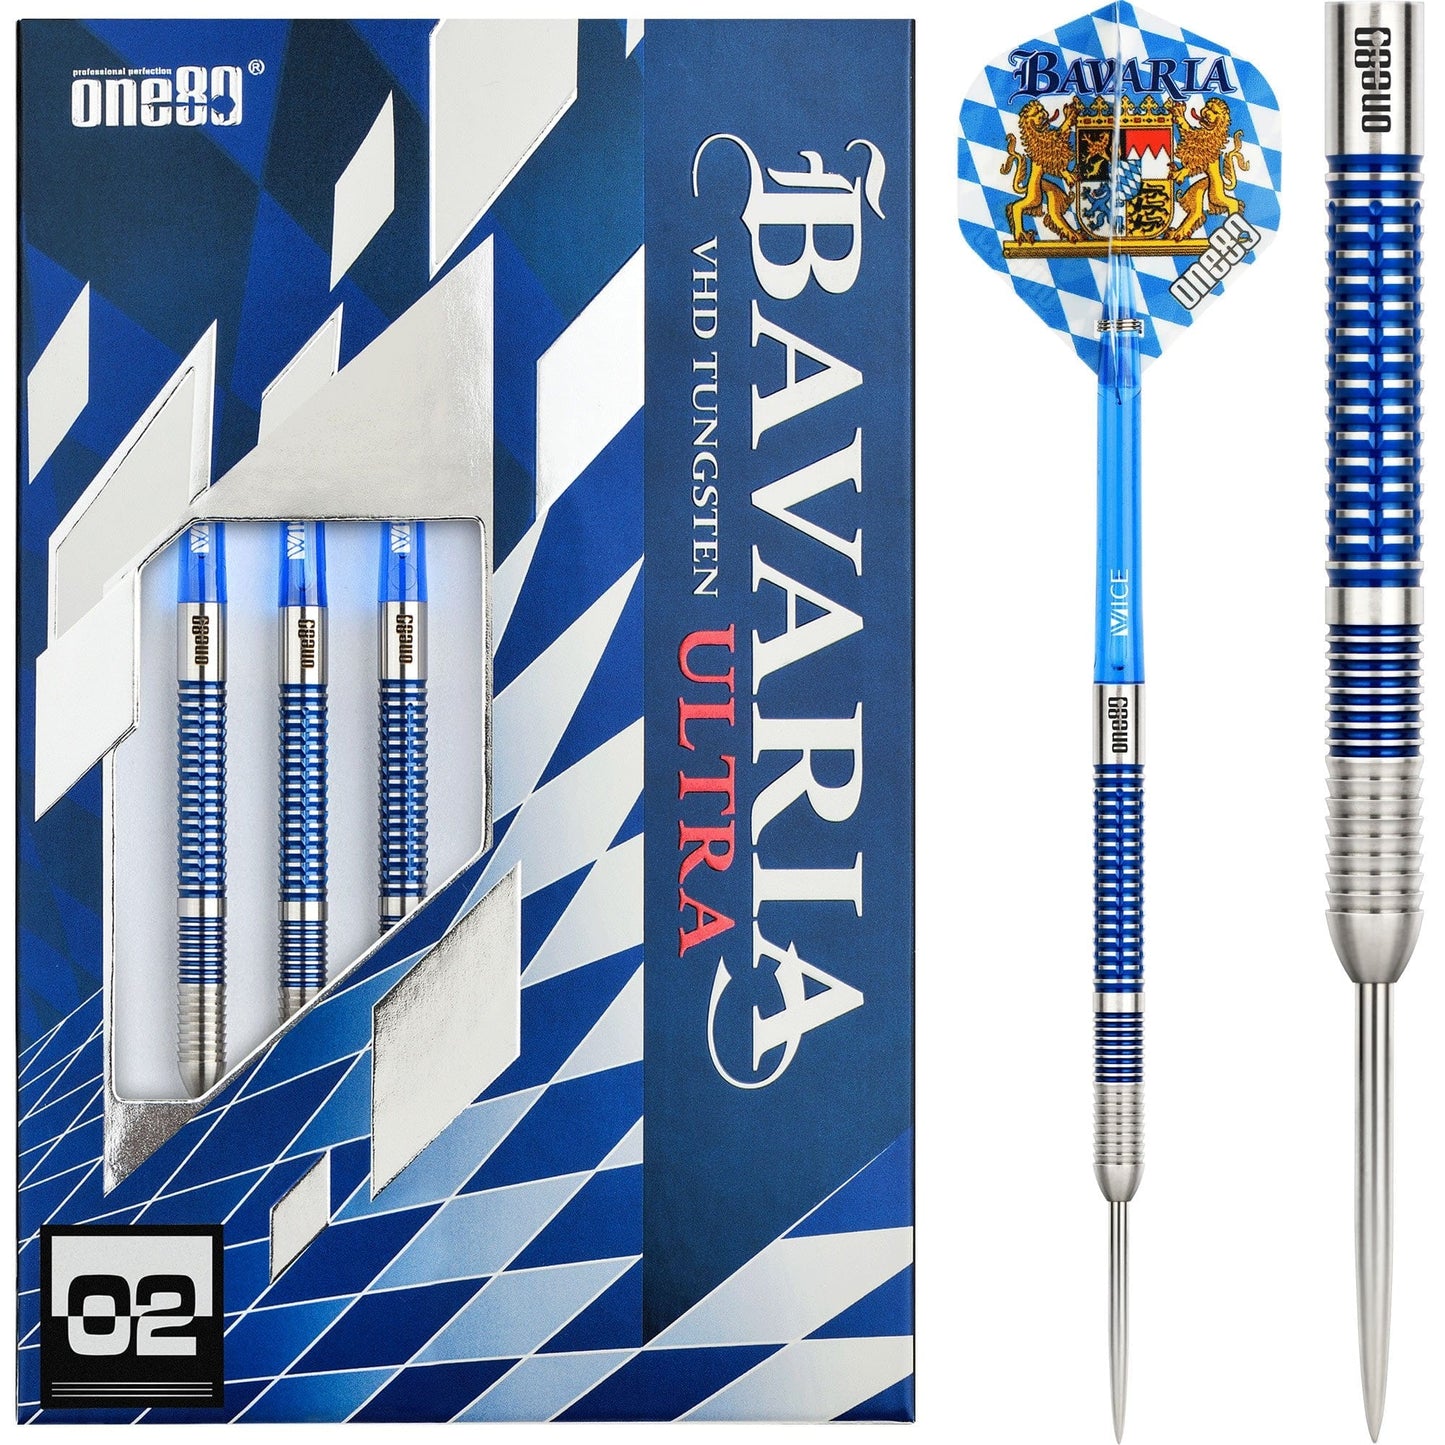 One80 Bavaria Ultra Long Darts - Steel Tip - S02 - Blue 21g